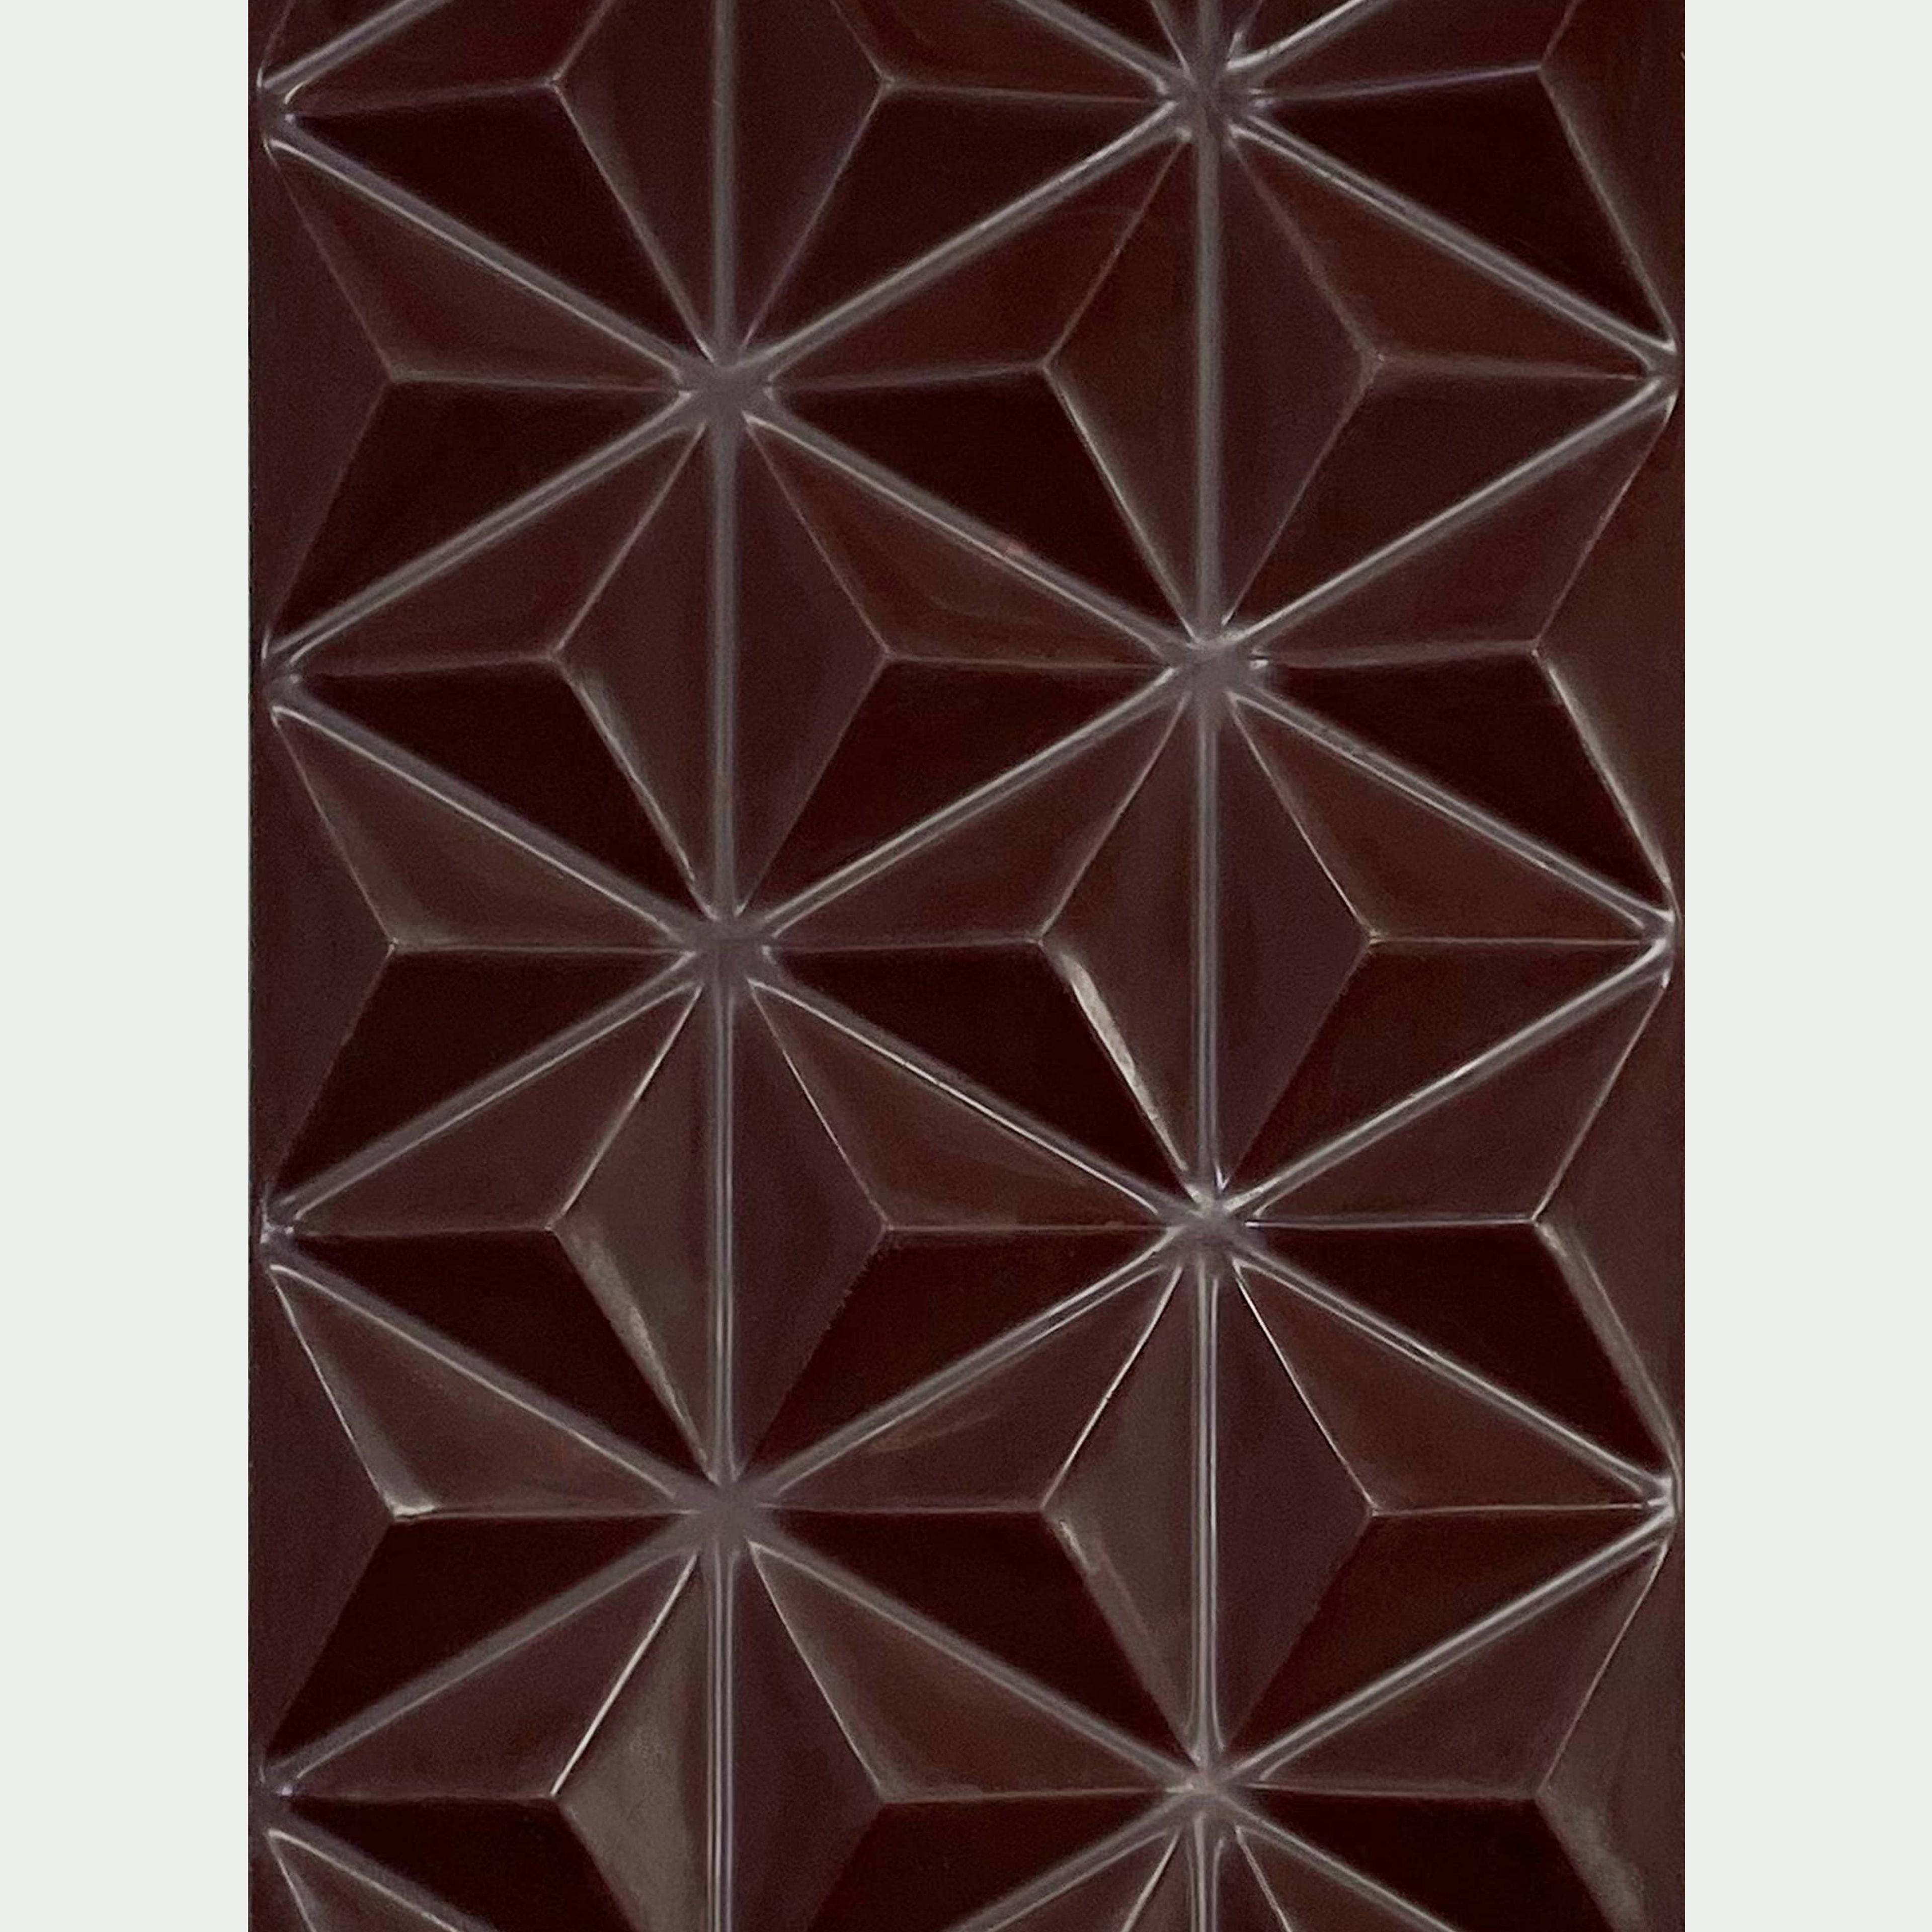 Dark Chocolate with Miso Almonds (Vegan)